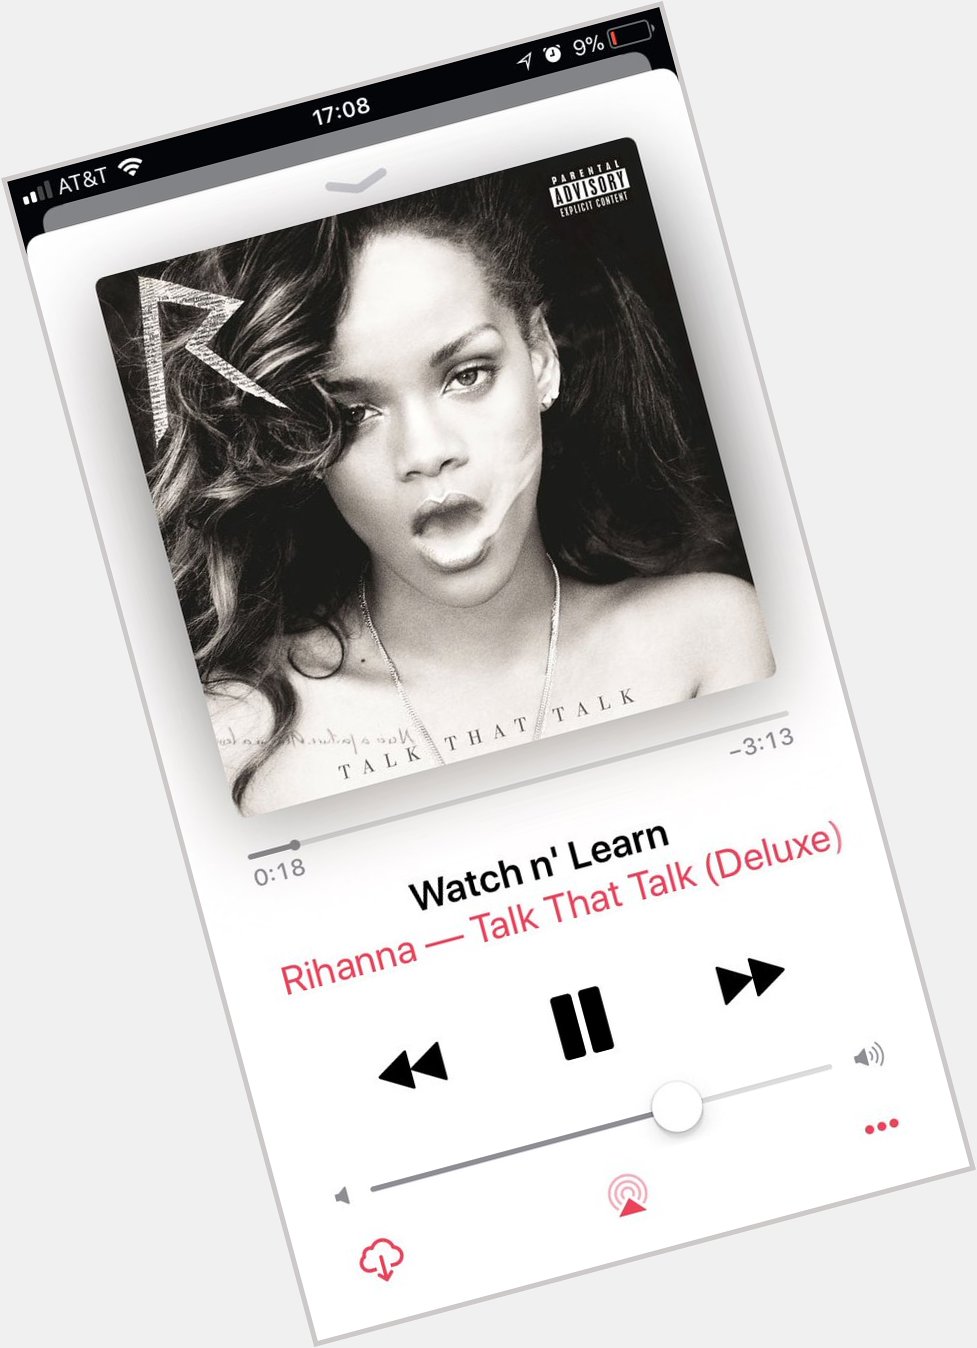 My favorite song by Rihanna. happy birthday Riri!! 